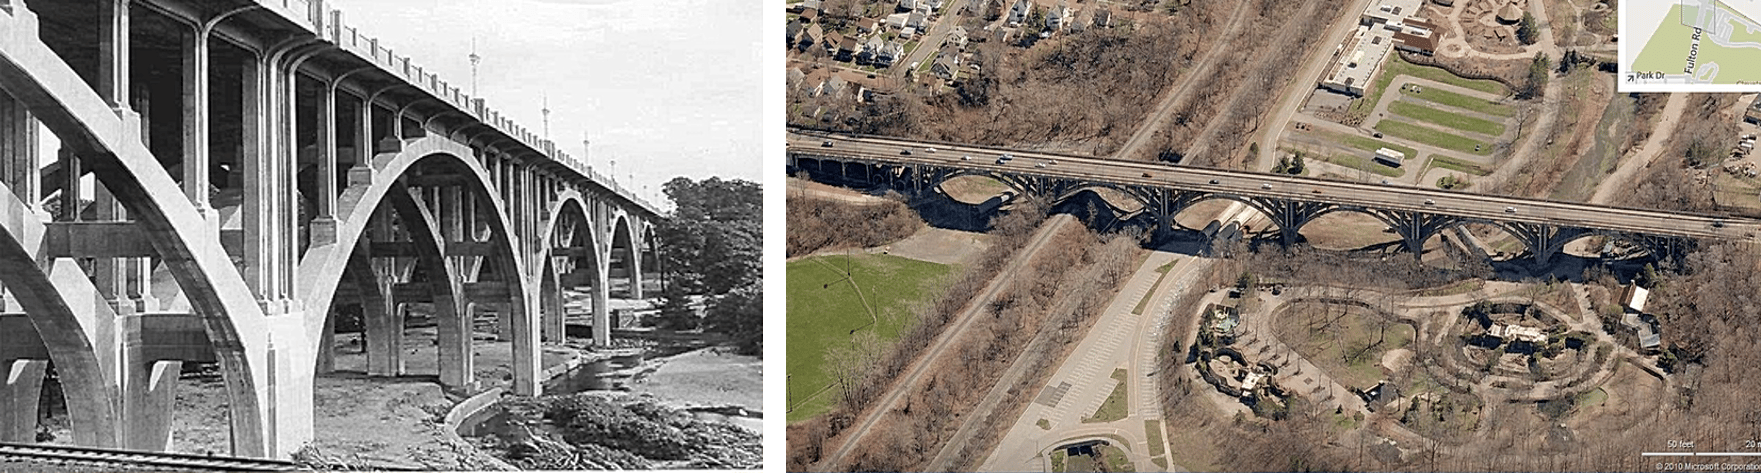 Left The original Fulton Street Bridge structure (now demolished).Right Aerial view of the new Fulton Street Bridge